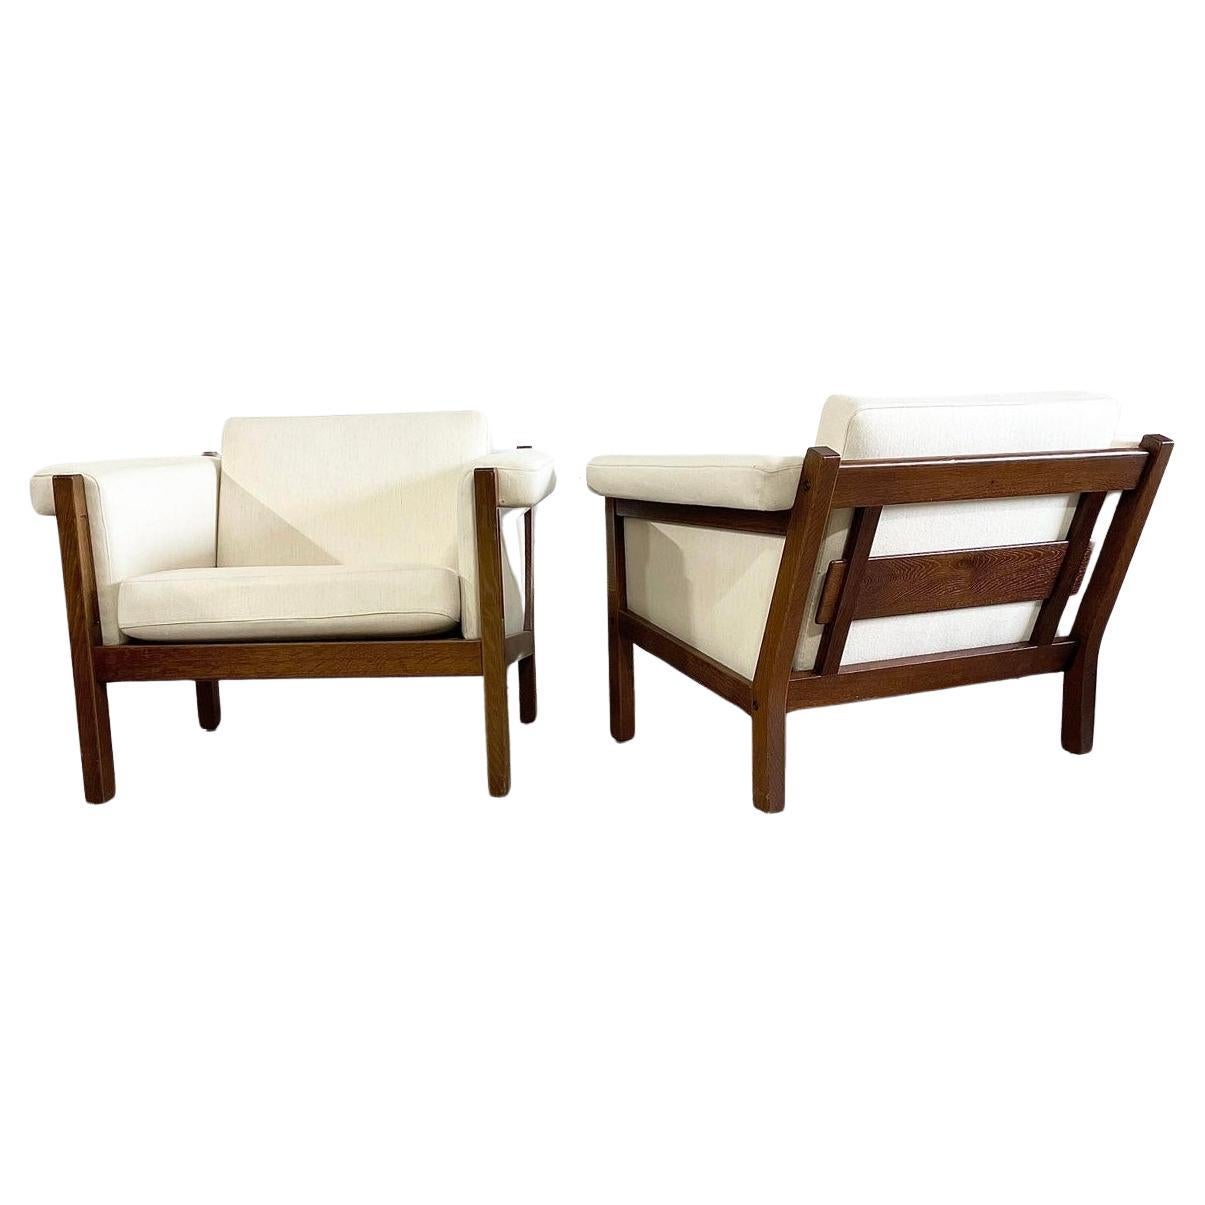 Hans Wegner Ge40 Getama Danish Modern of Lounge Chairs - a Pair